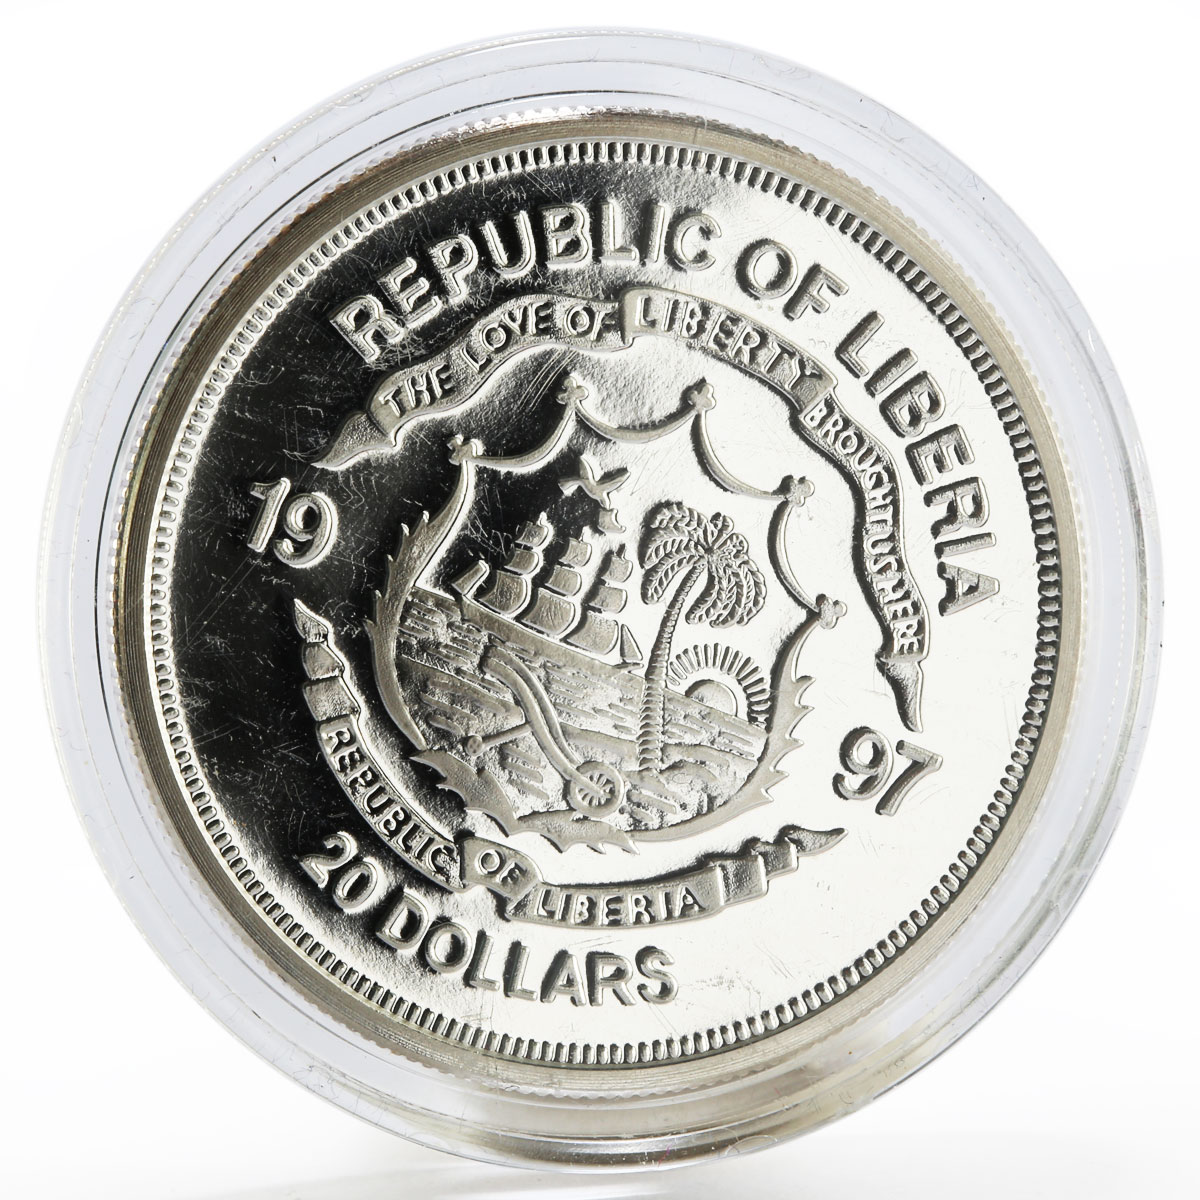 Liberia 20 dollars Lady Diana series Australian Tour proof silver coin 1997